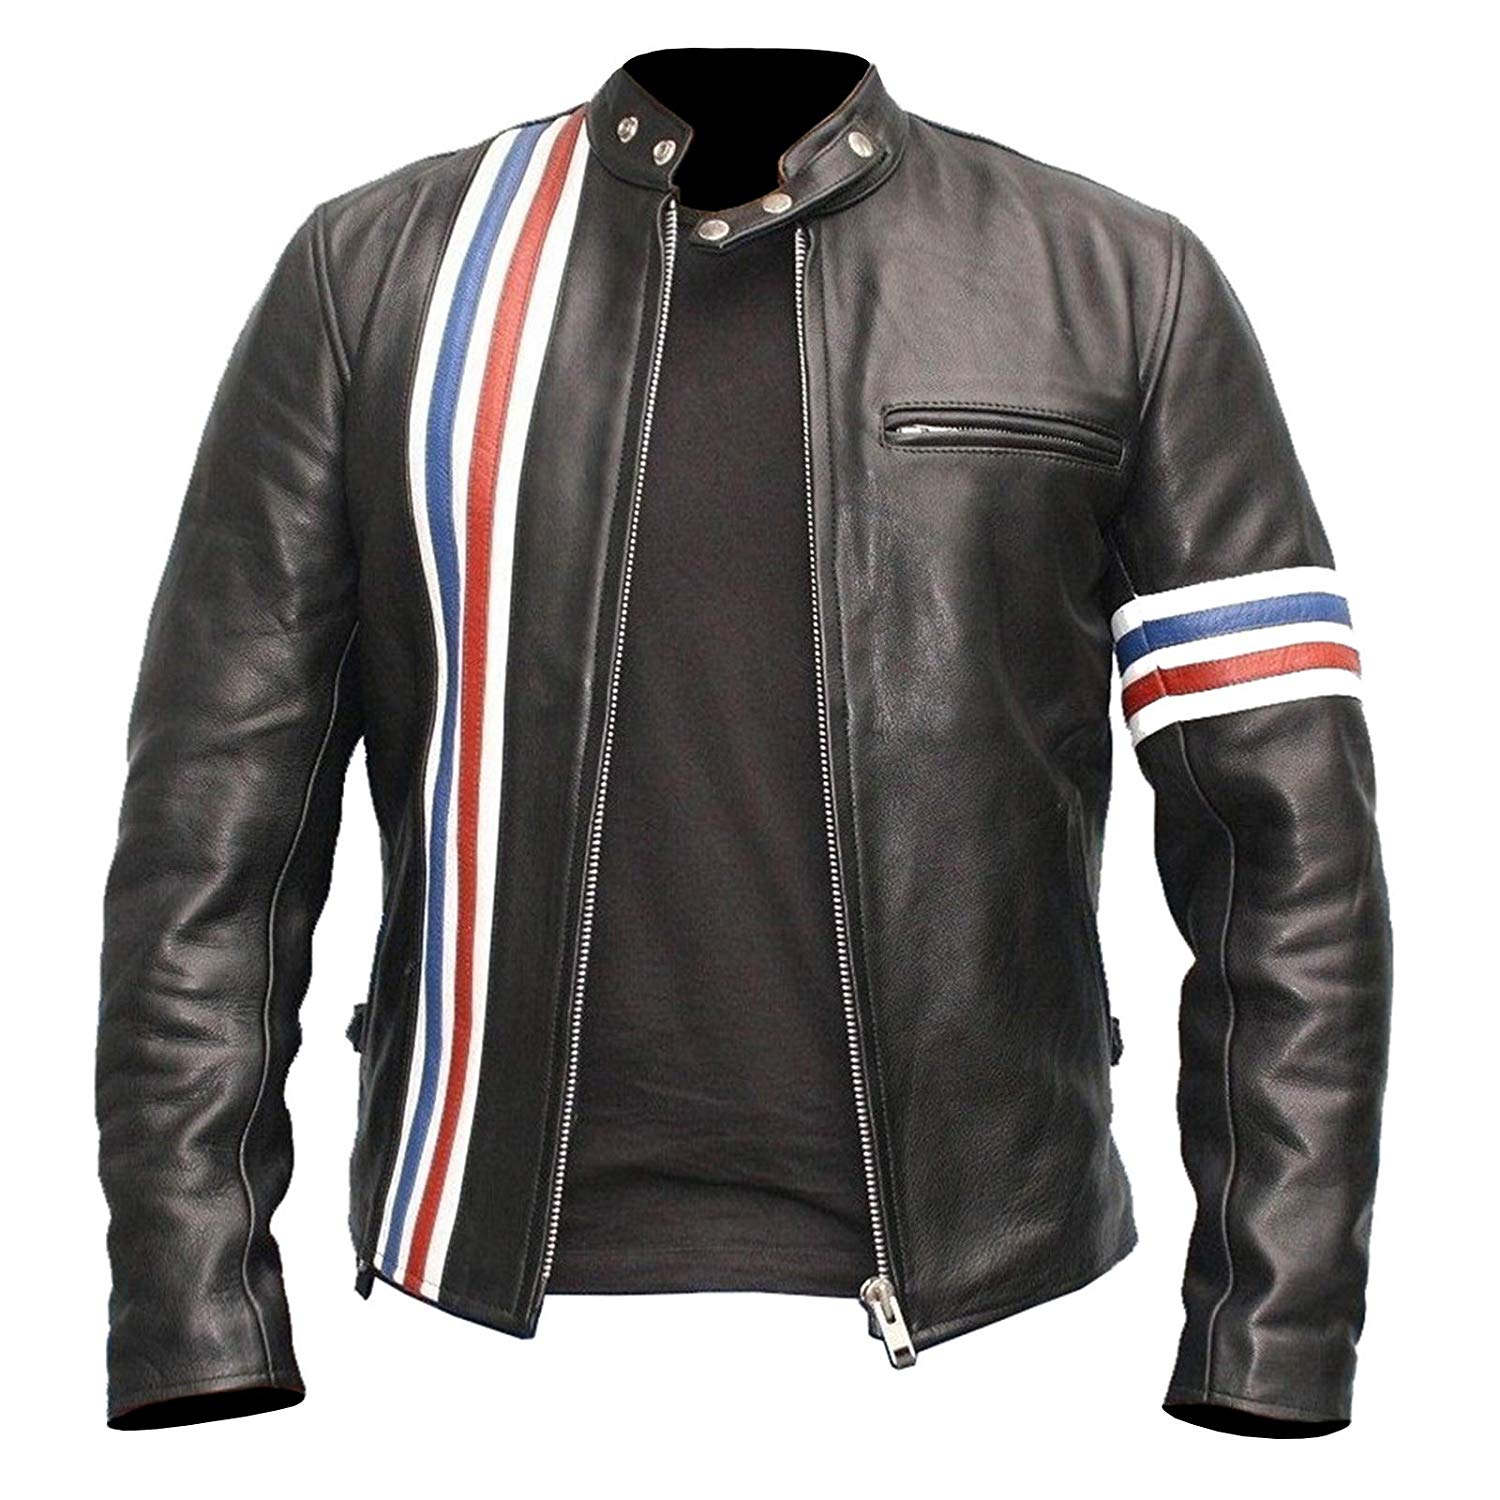 Easy rider jacket - rytequik